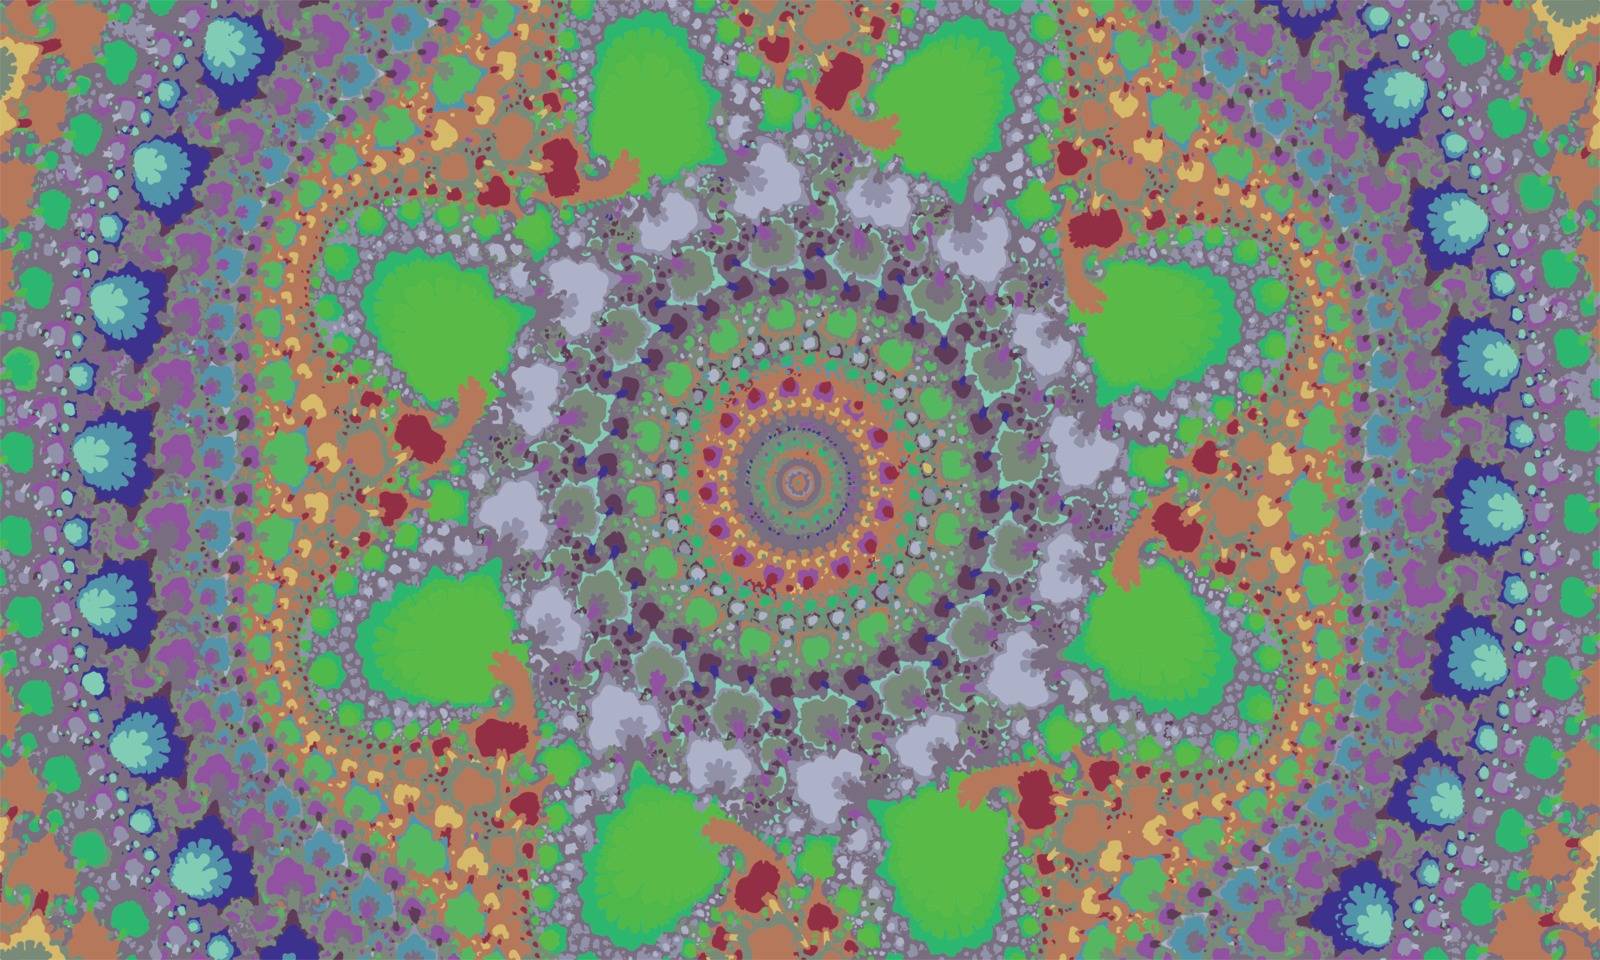 Mandelbrot fractal pattern, circular by InfinityChaos